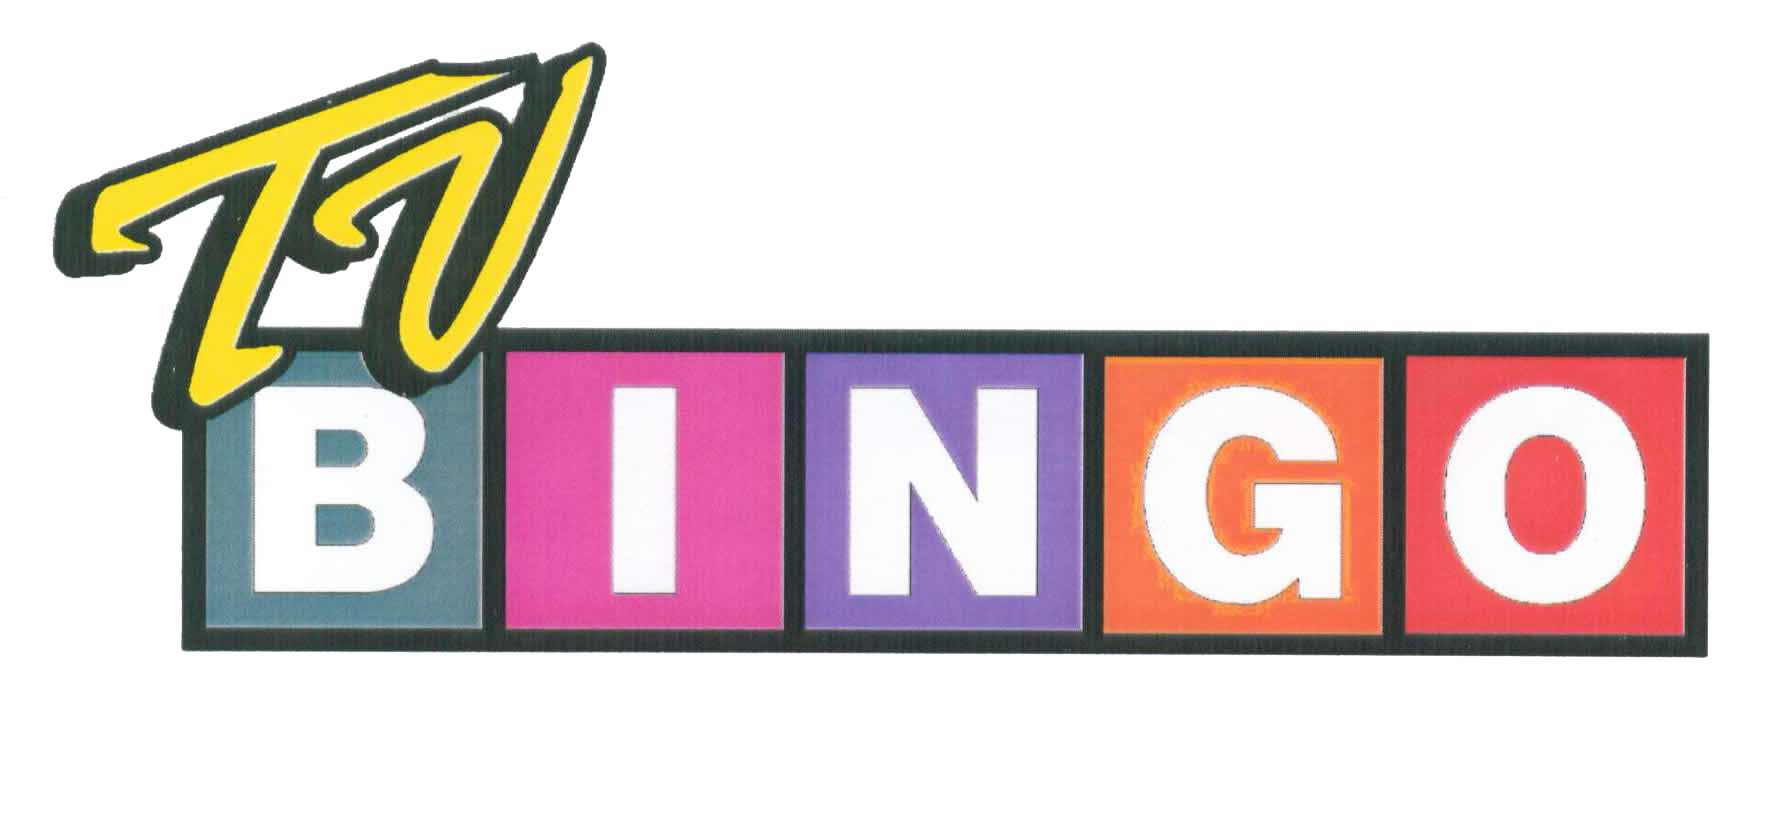 TV Bingo